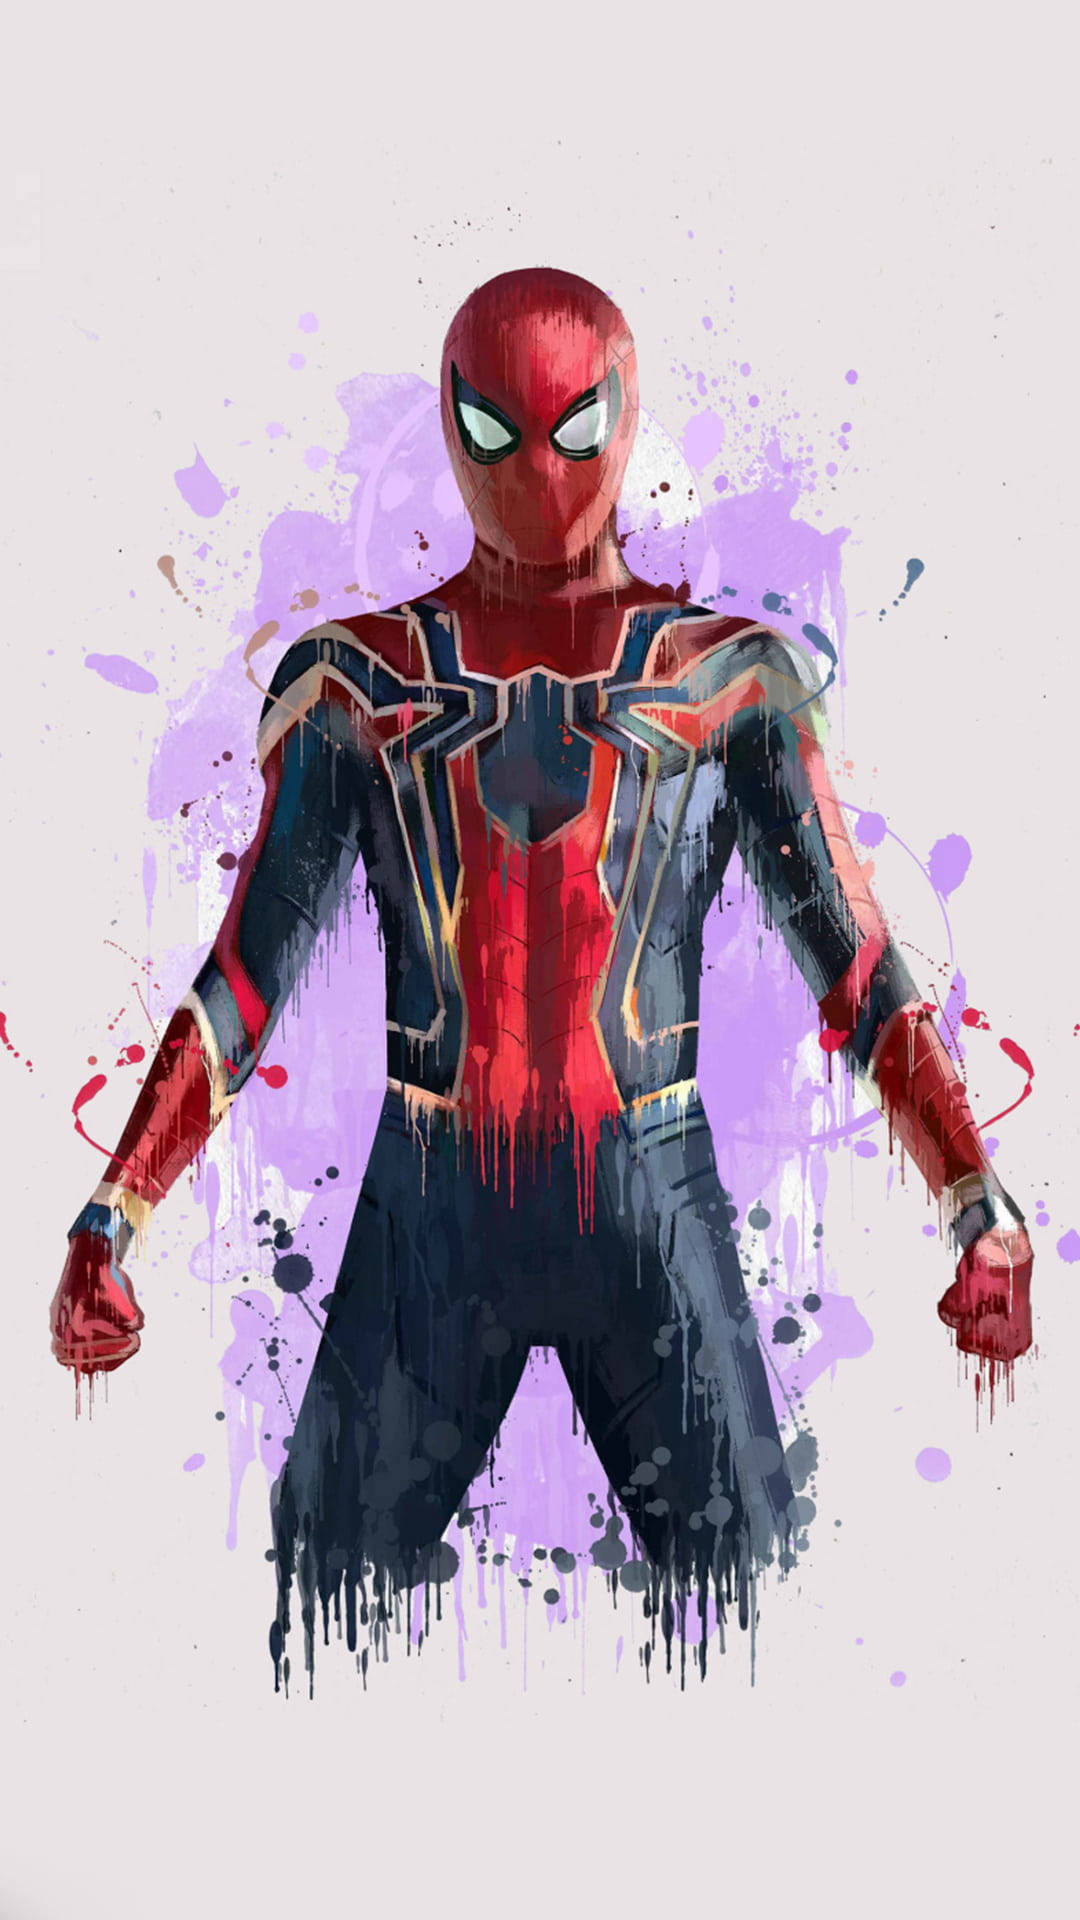 Download Spiderman Watercolor Art 4k Marvel Iphone Wallpaper | Wallpapers .com